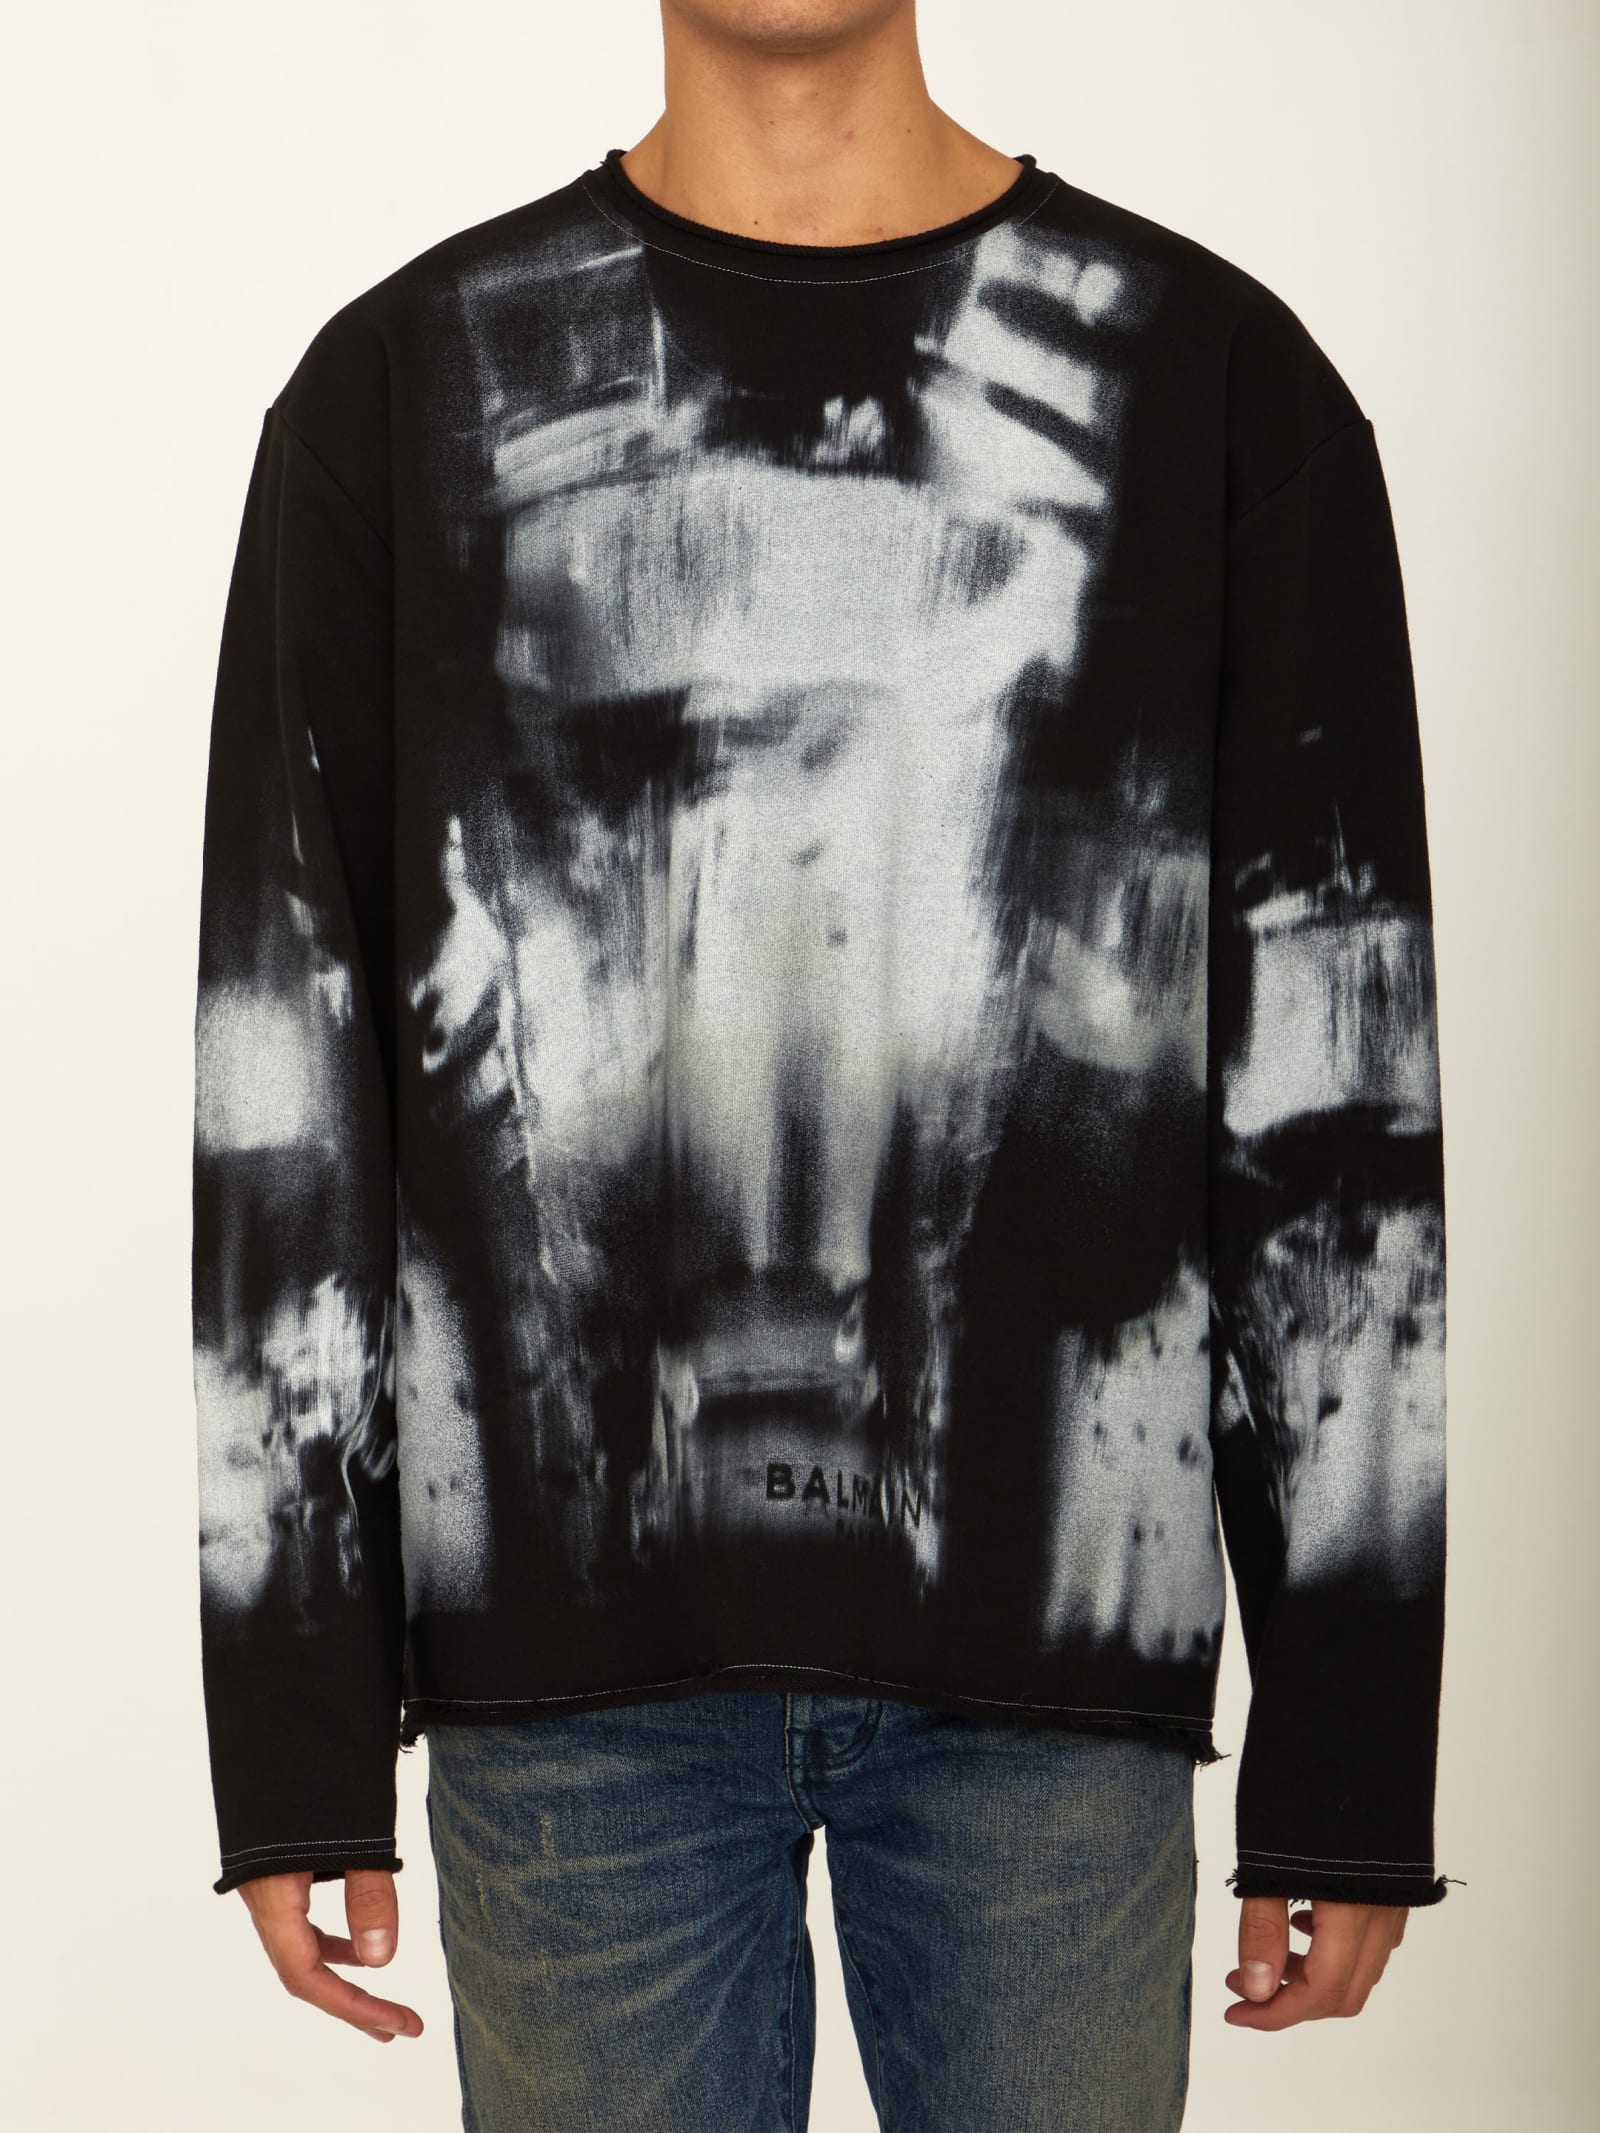 Balmain X-ray Print Sweatshirt